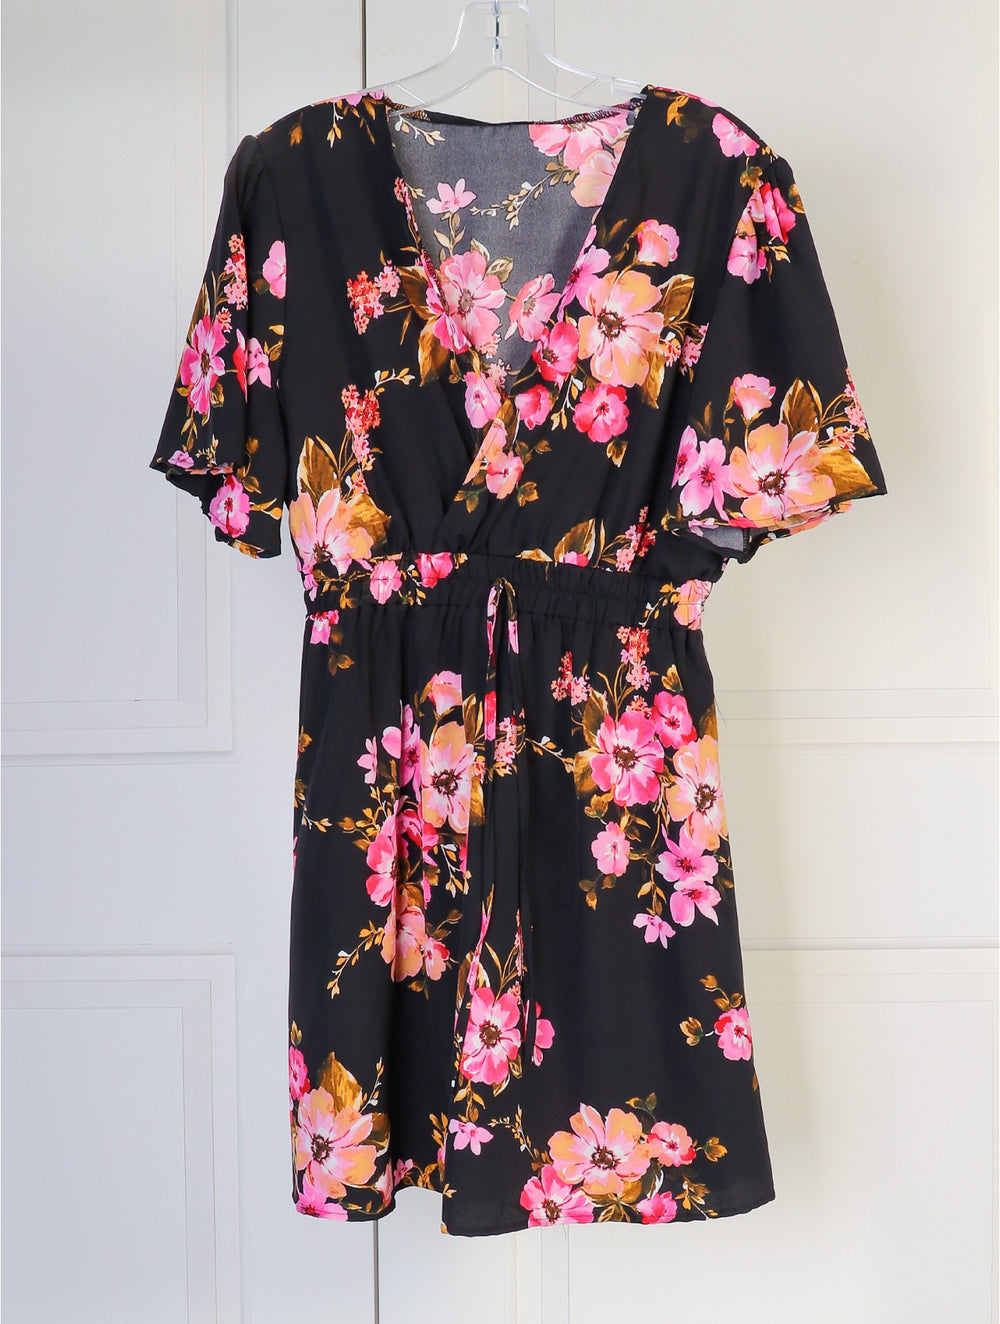 Grand-Stretchy Print Dress-Black & Hot Pink Floral (CL175809)